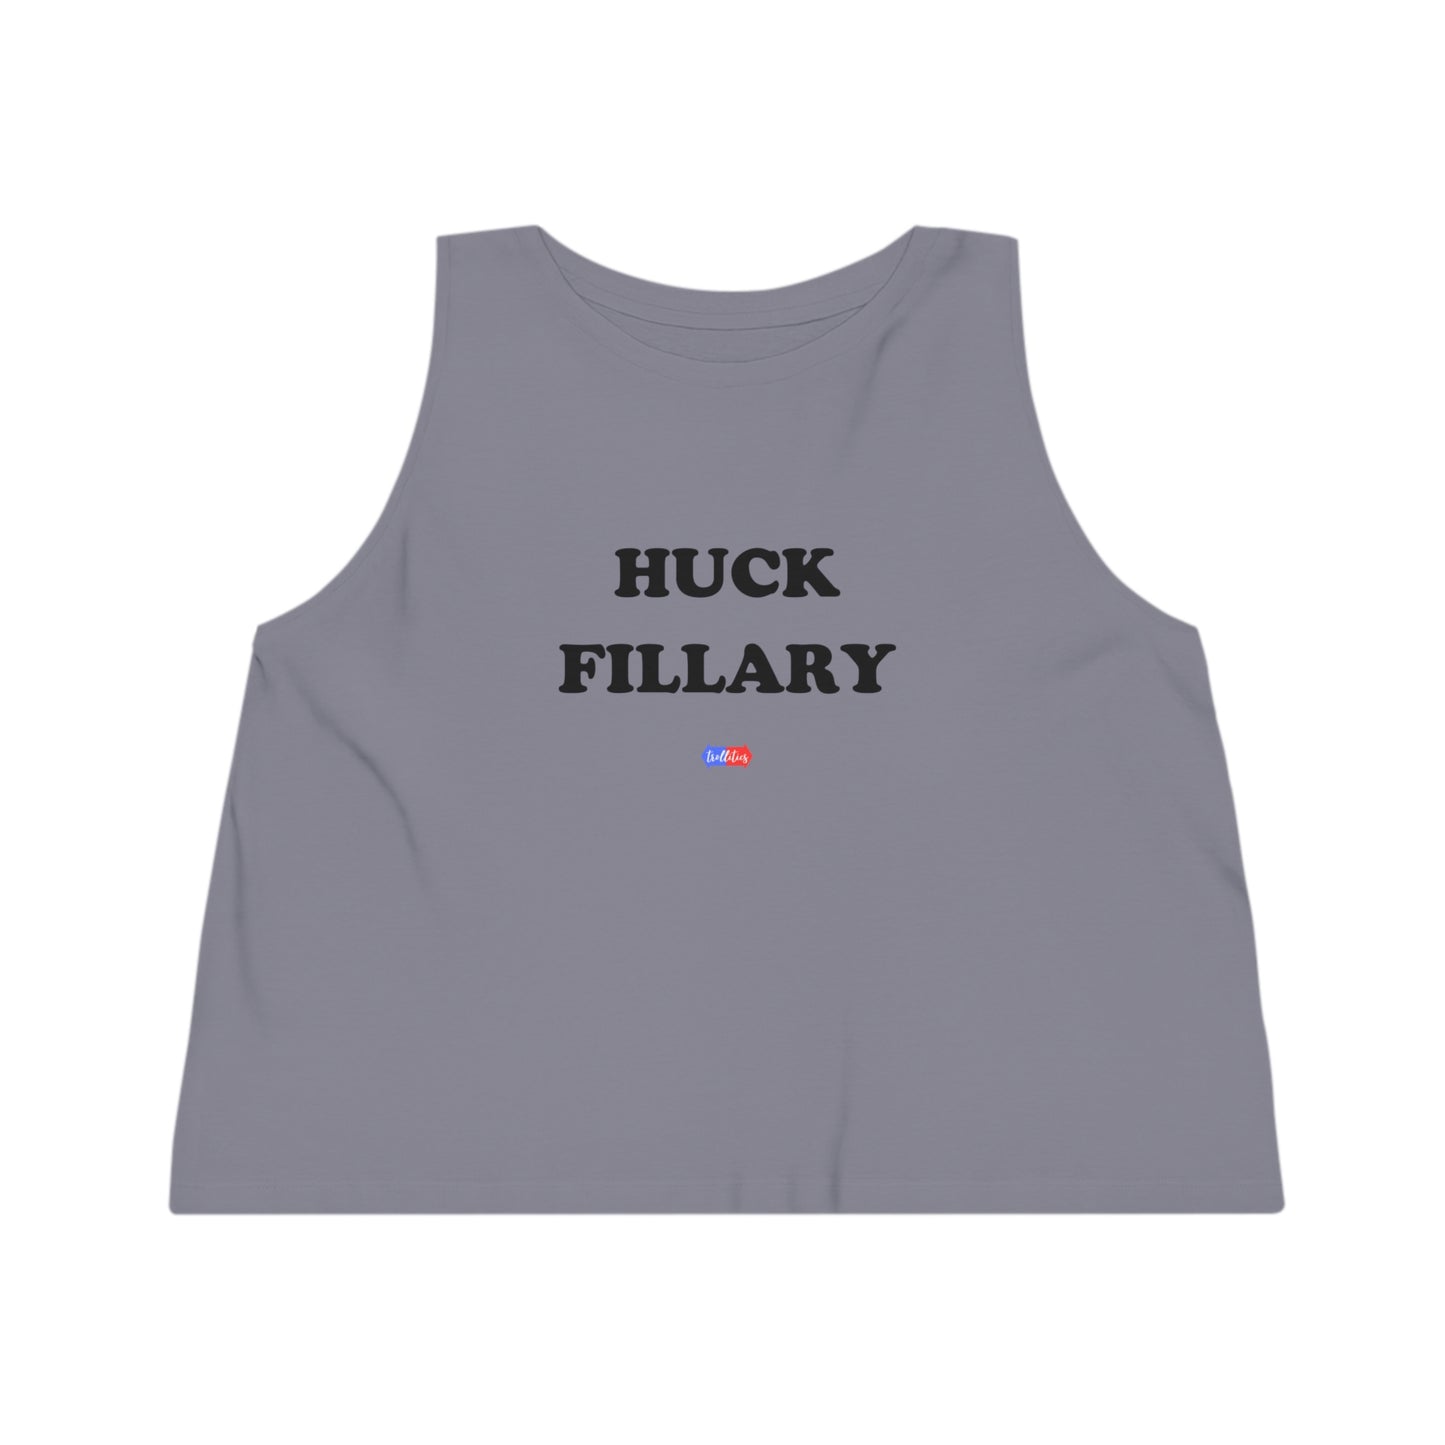 Huck Fillary Women's Cropped Tank